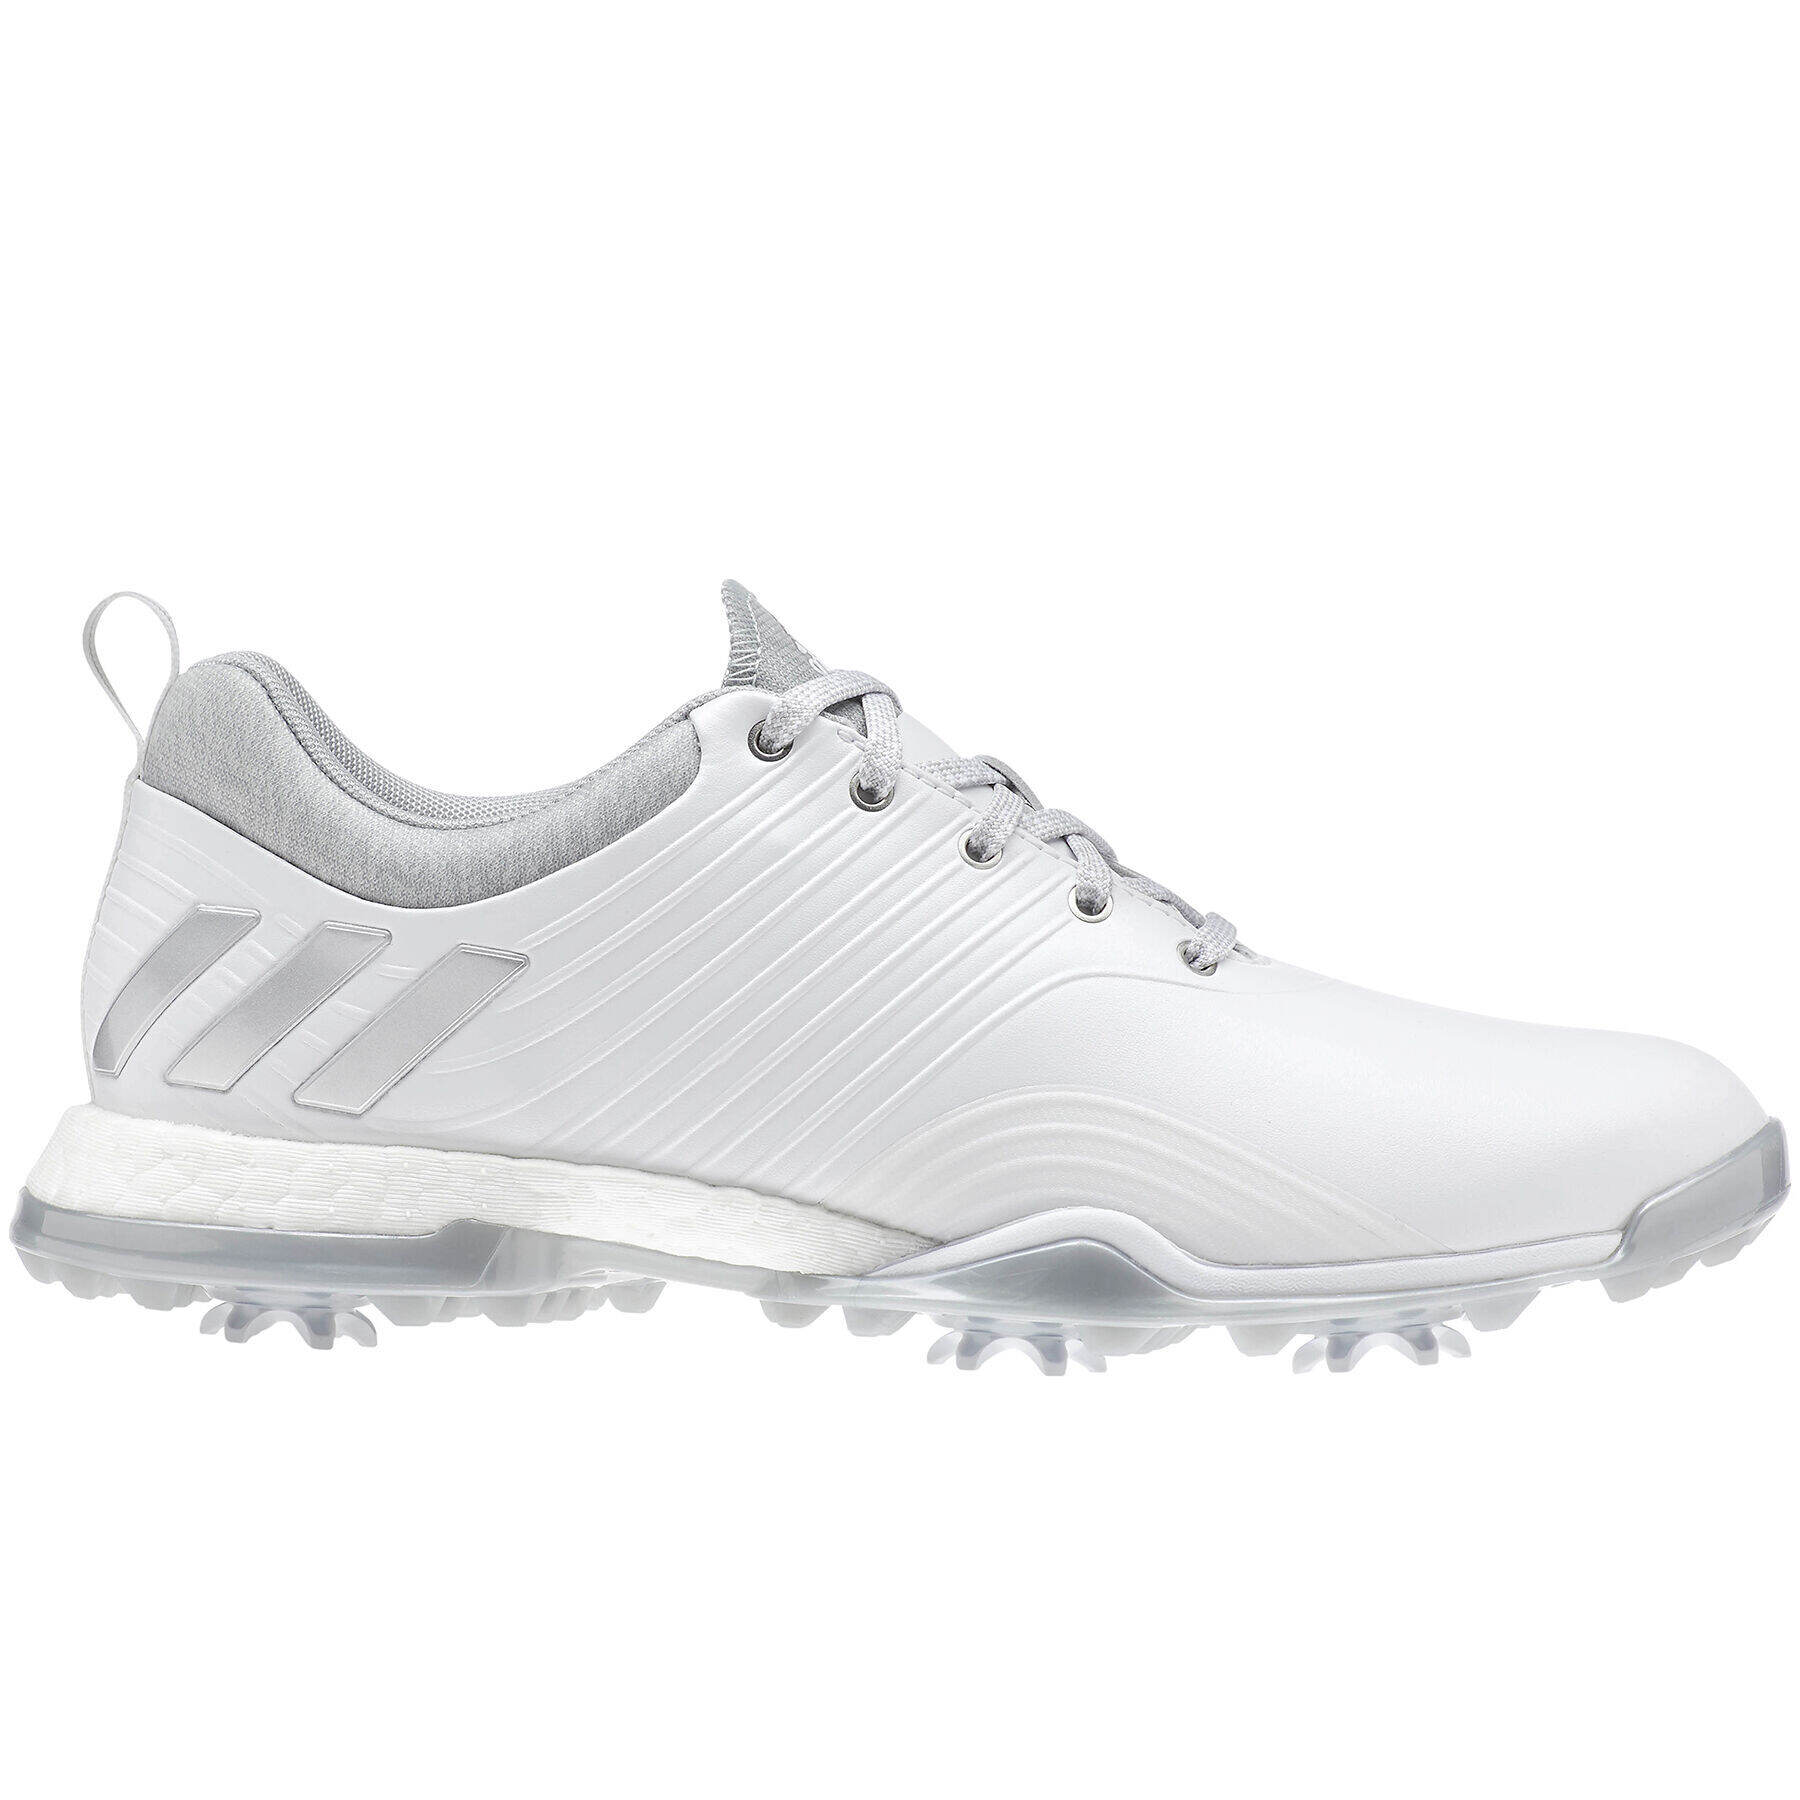 adidas golf shoes white